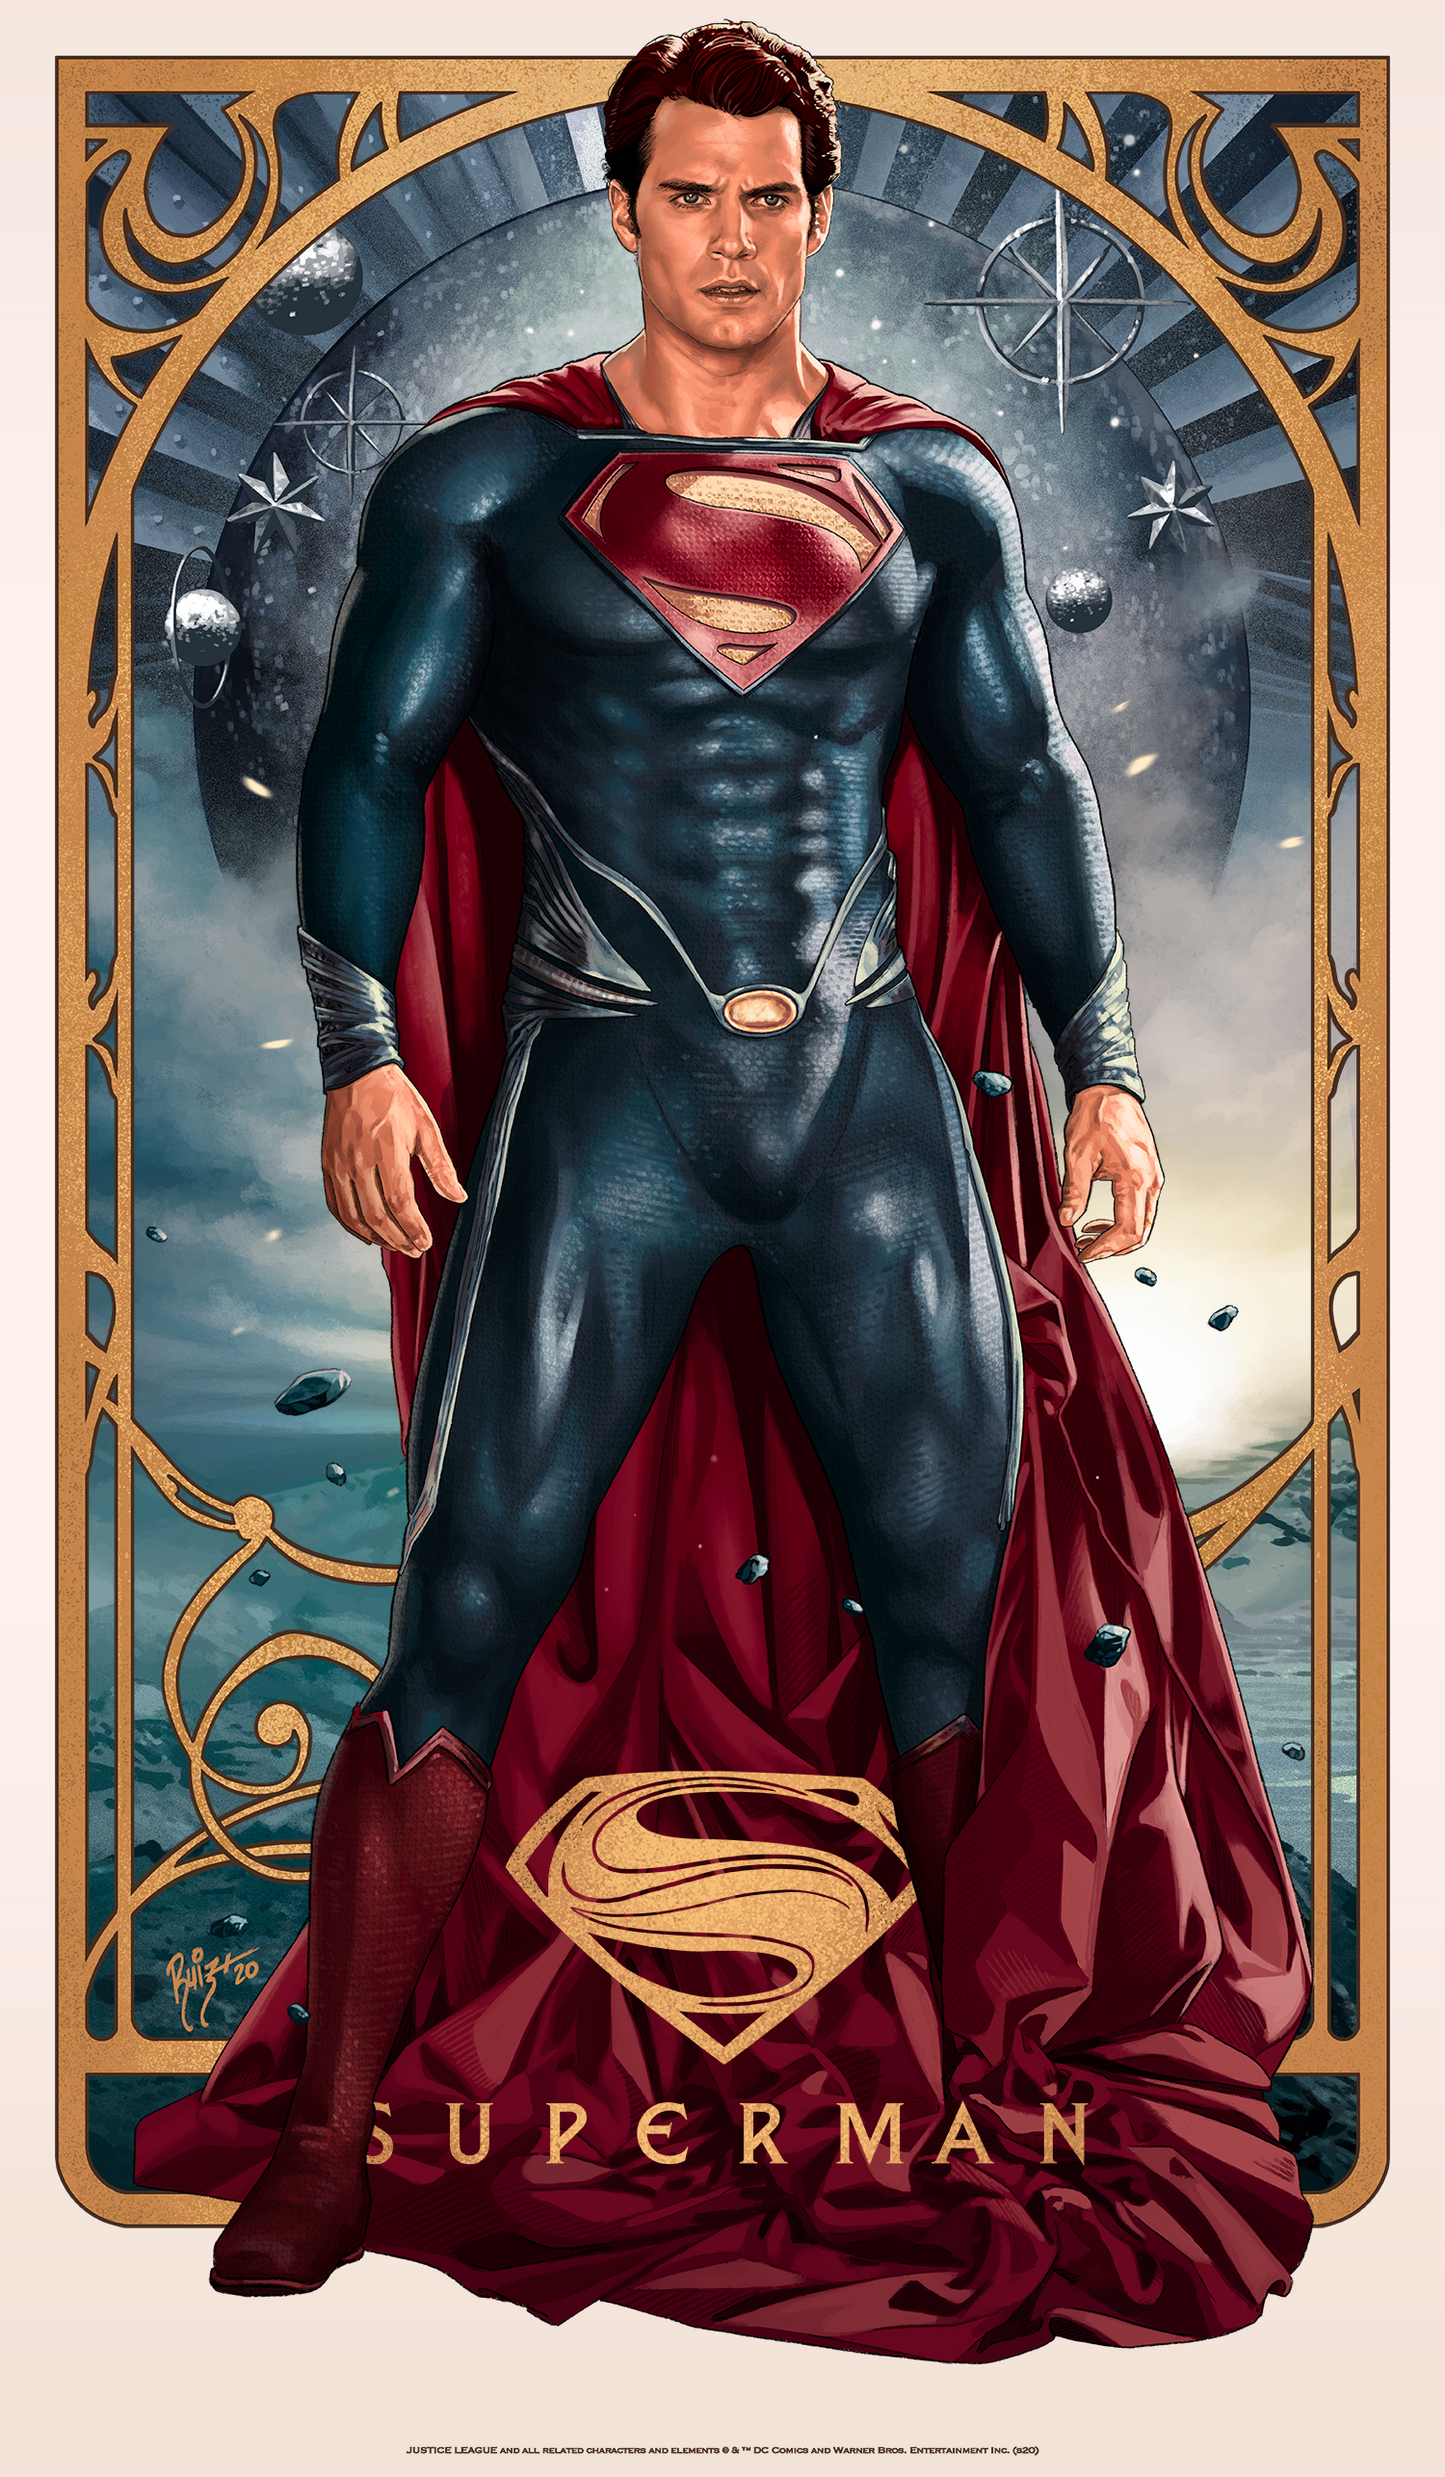 Juan Burgos "Superman"